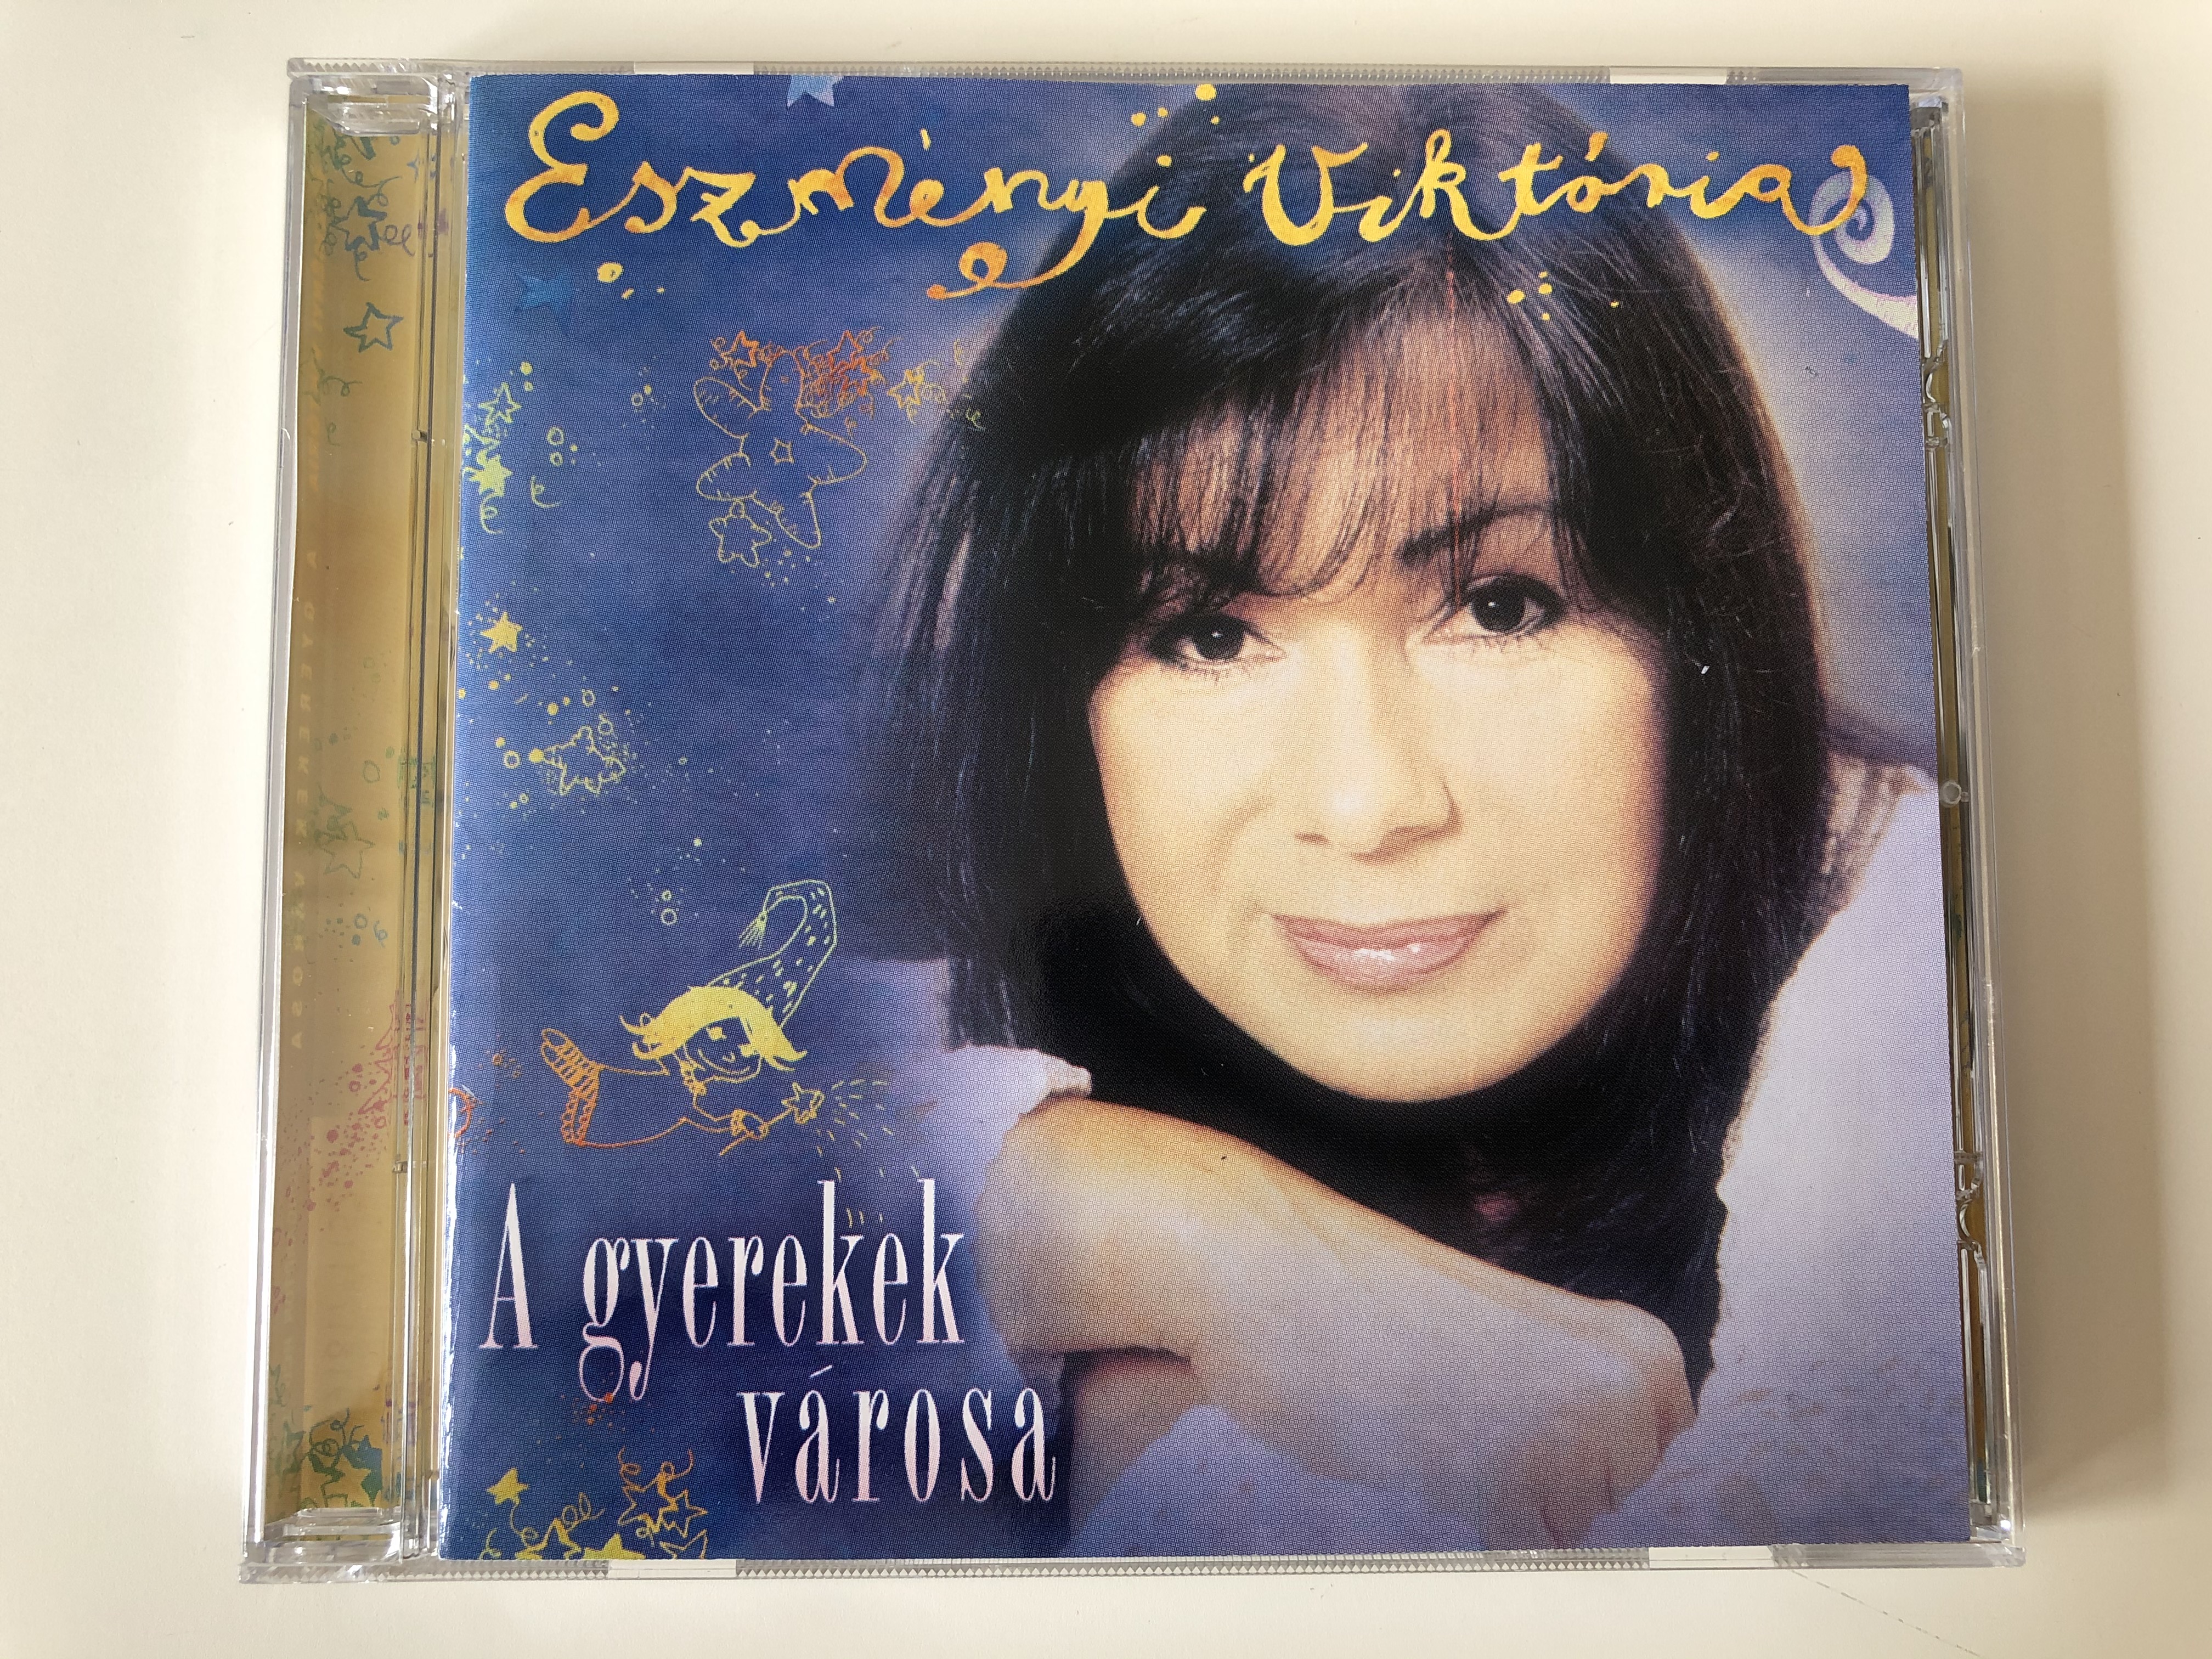 eszm-nyi-vikt-ria-a-gyerekek-v-rosa-hungaroton-audio-cd-2002-hcd-71152-1-.jpg